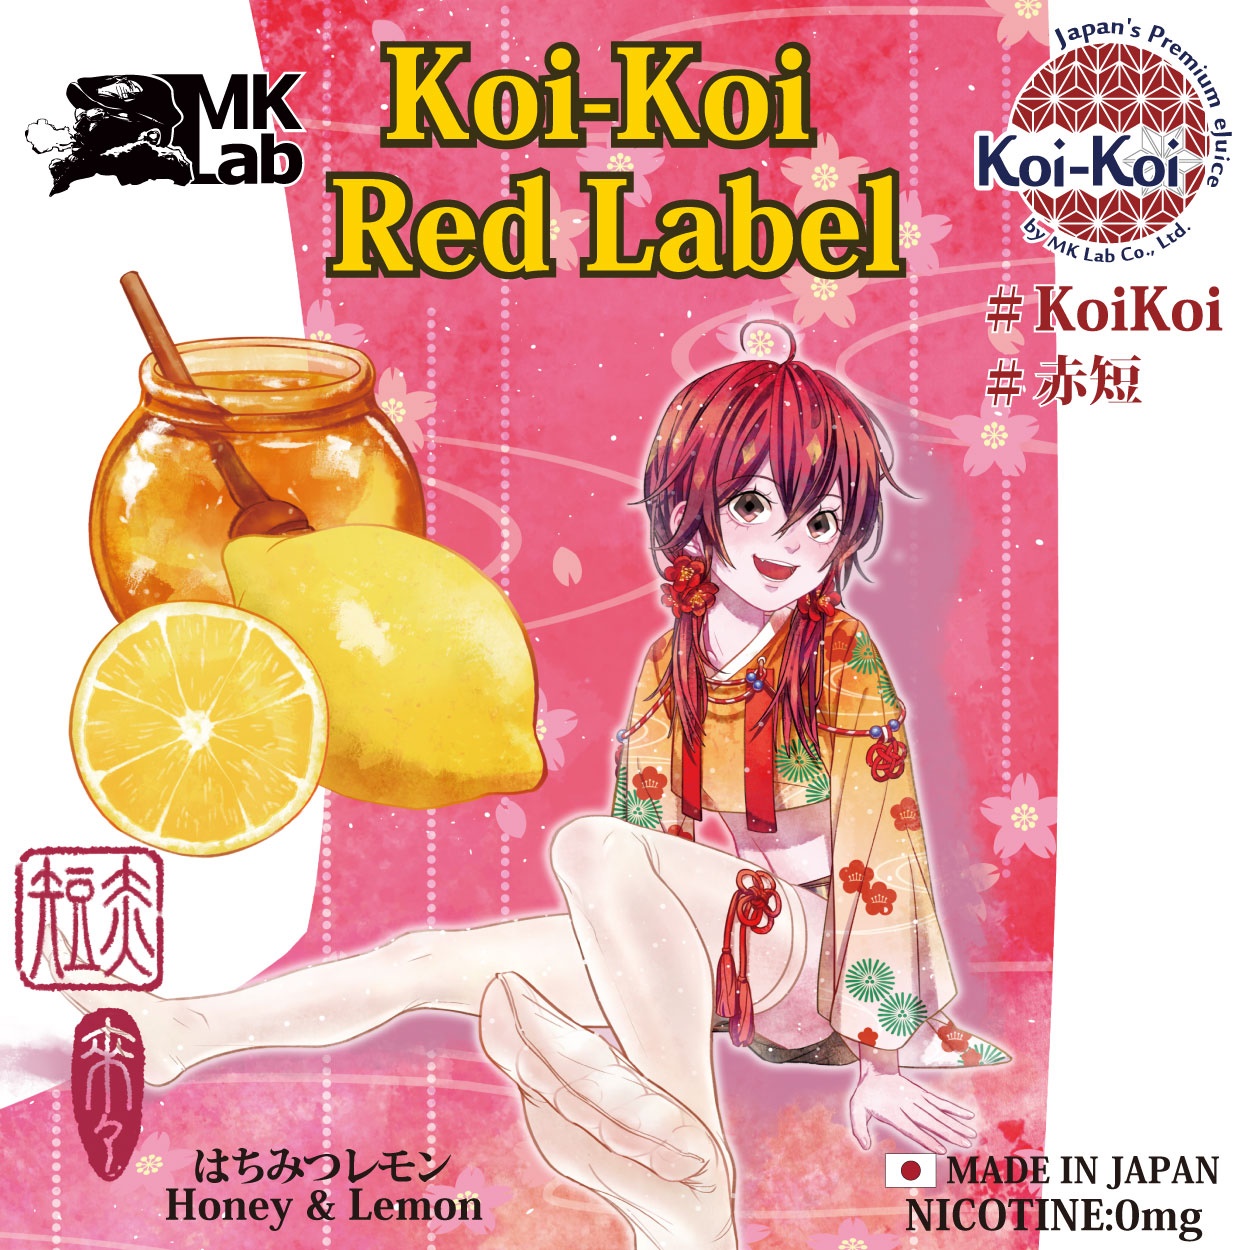 RED Label Honey&Lemon by MK Lab